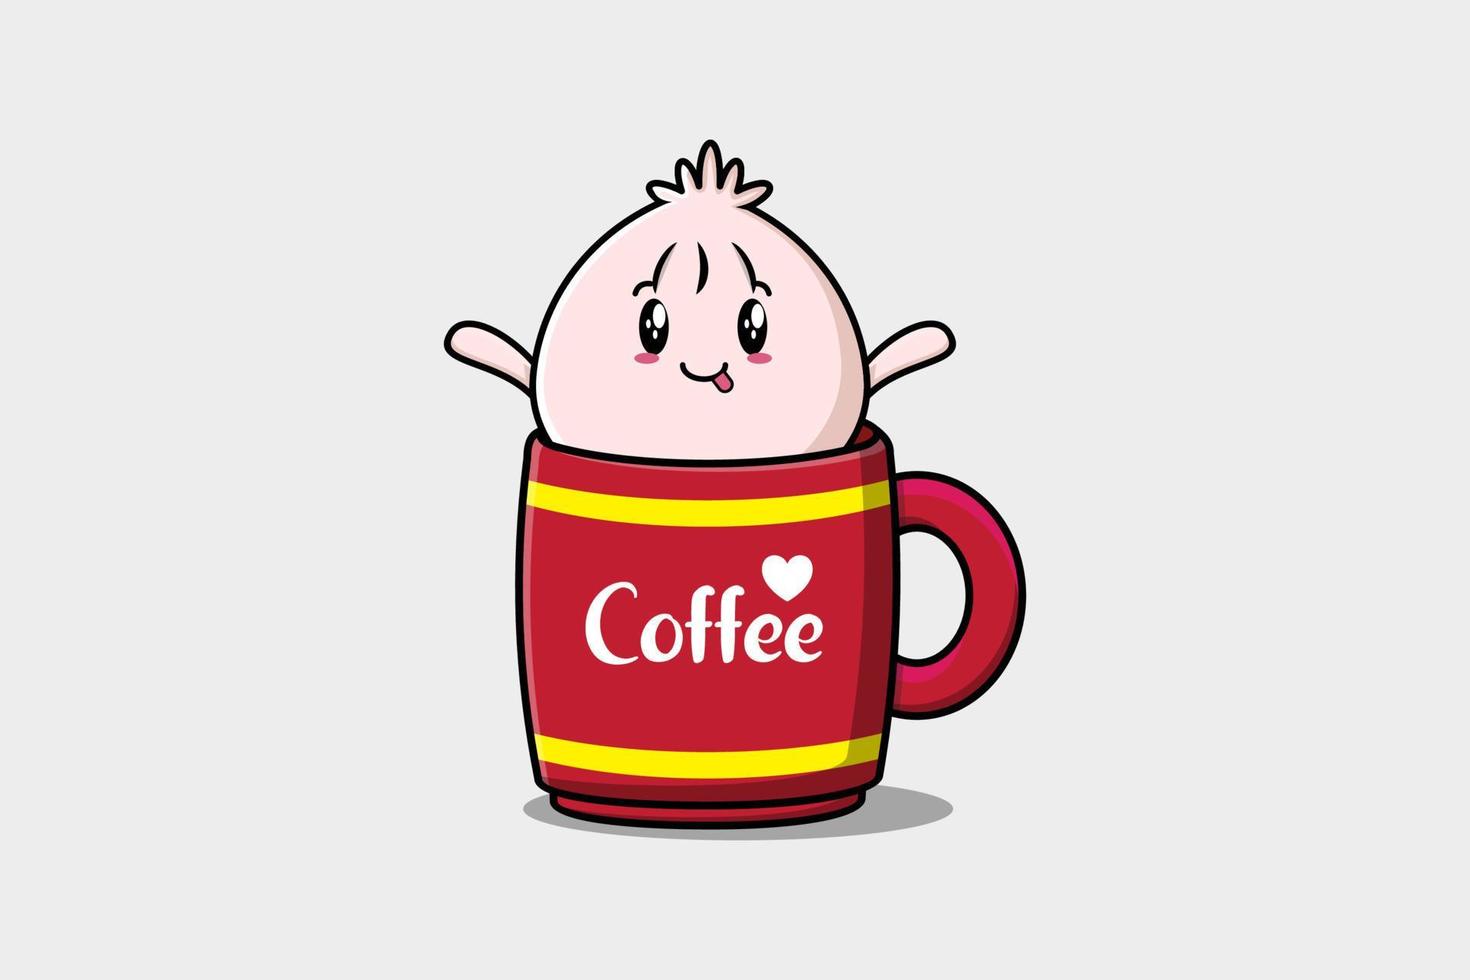 afm som schattig karakter illustratie in koffie kop vector